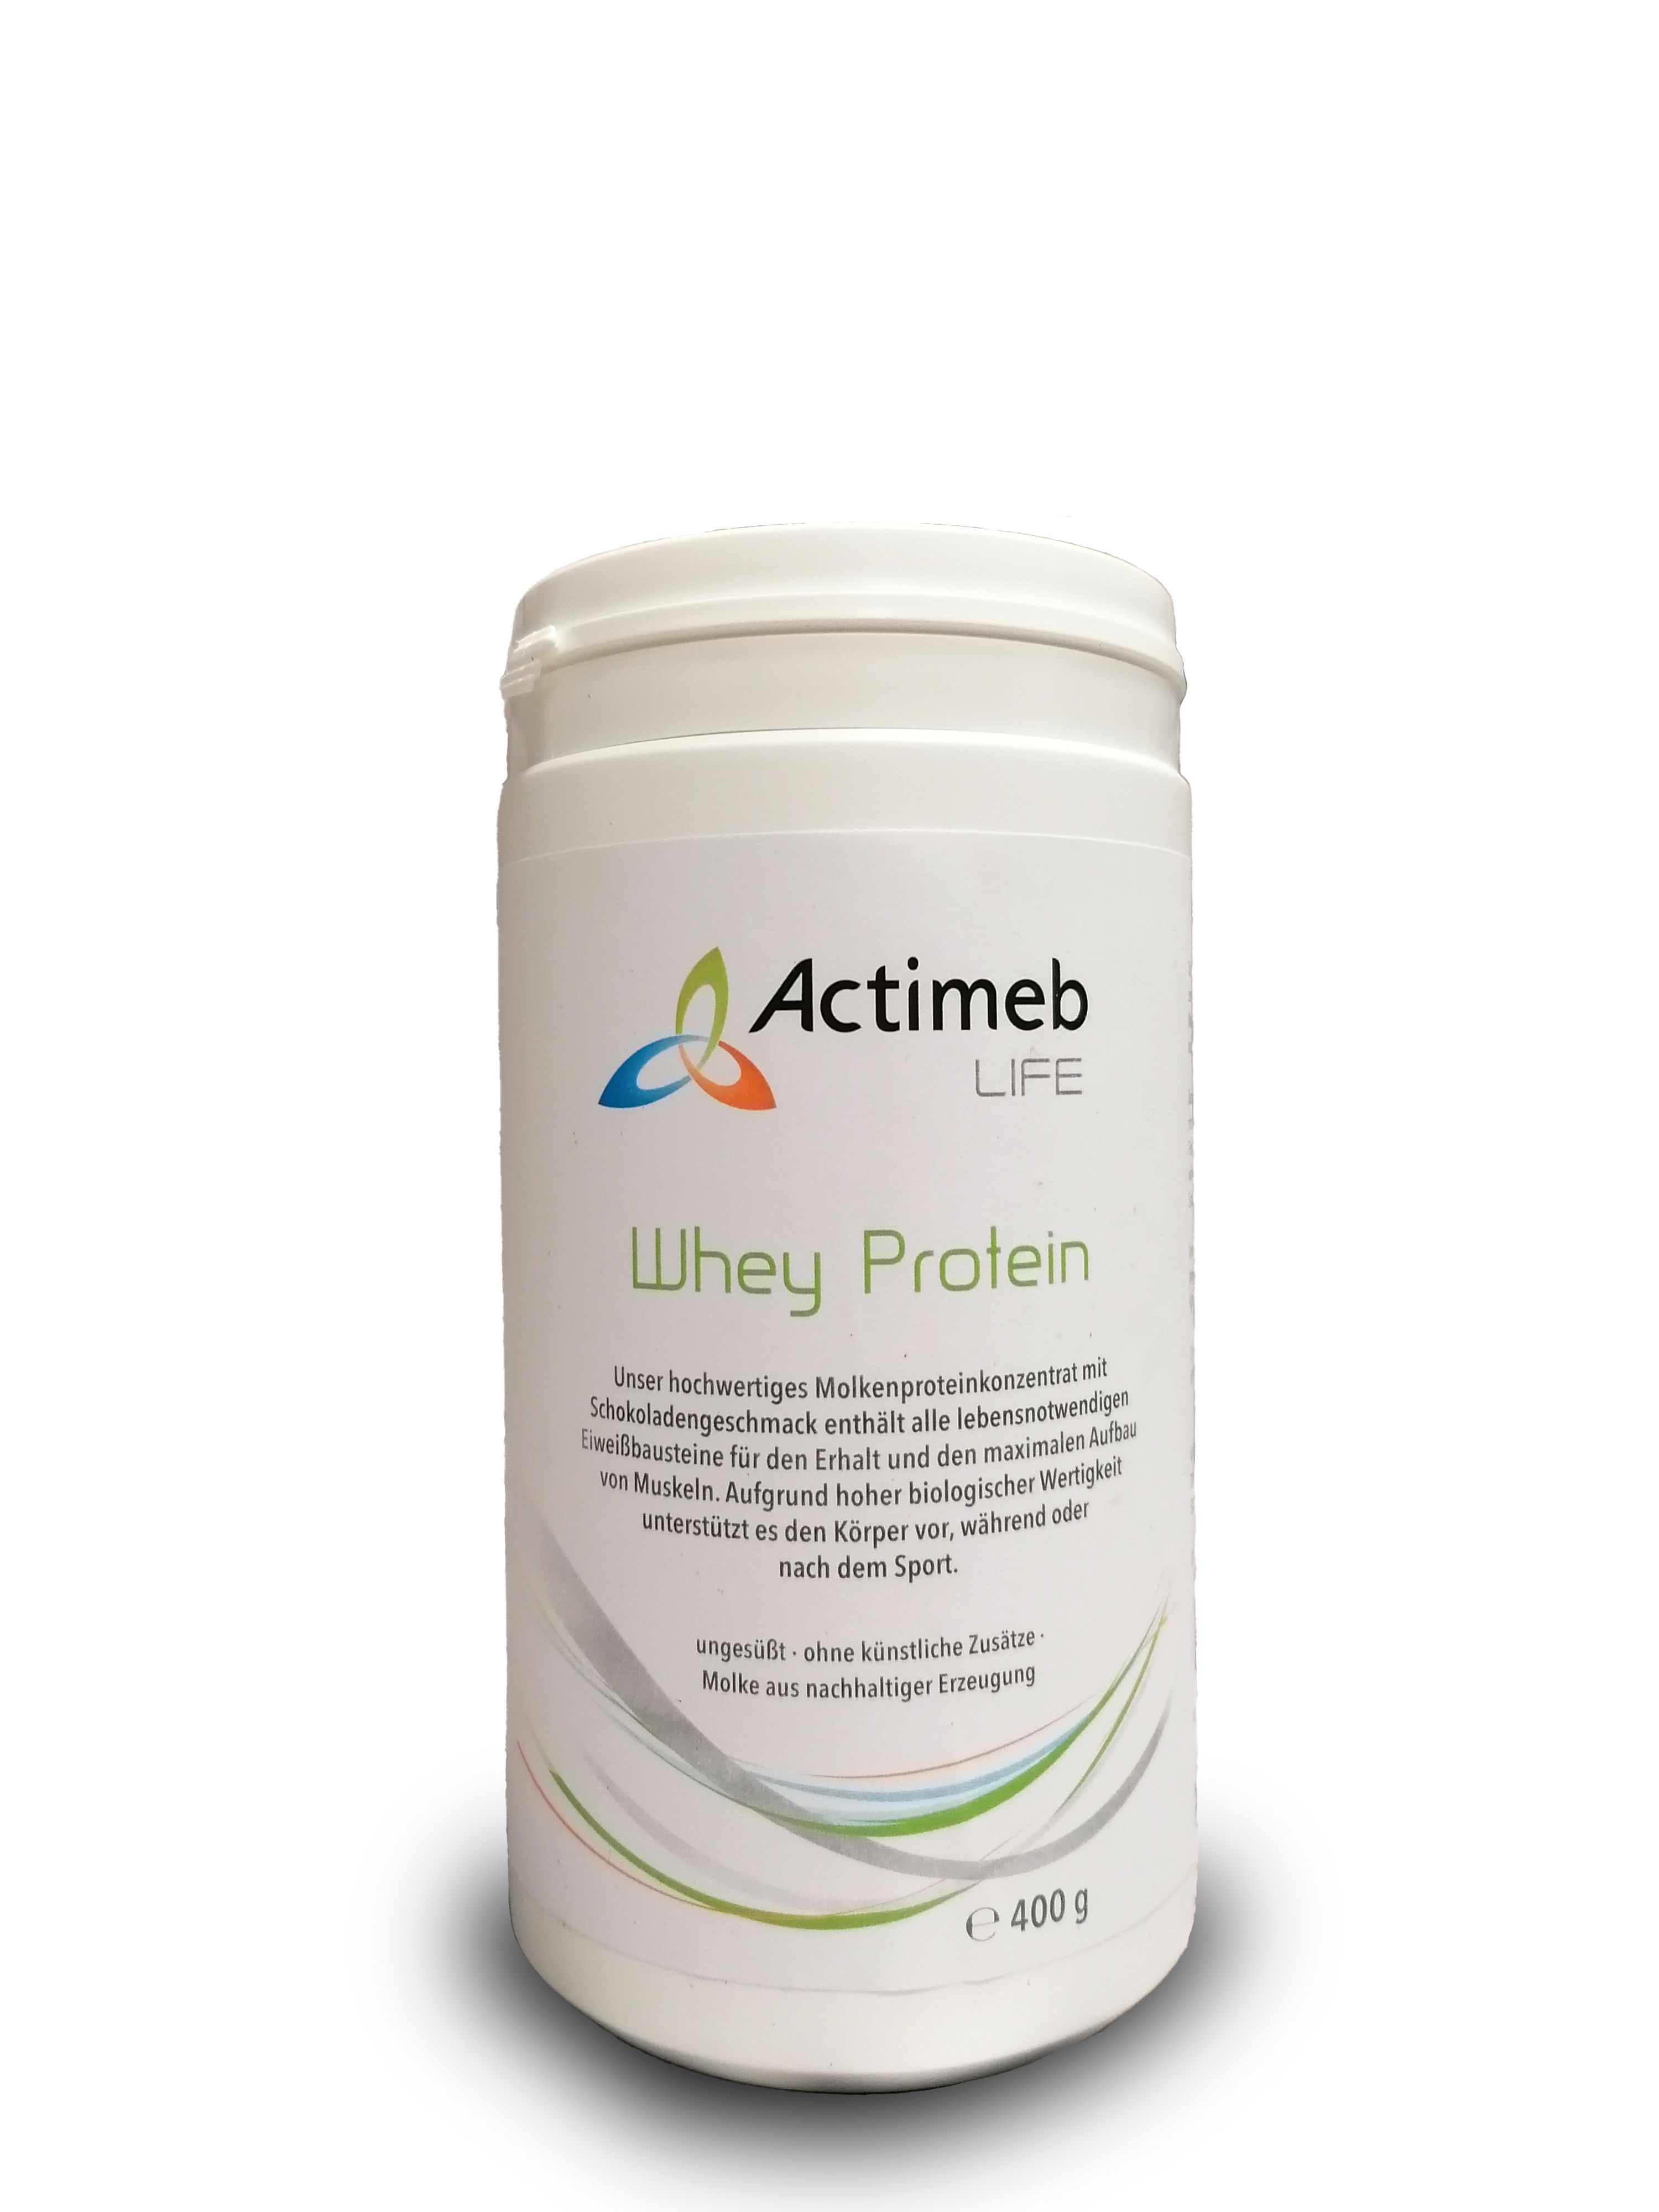 Actimeb Whey Protein 1 + 1 gratis!